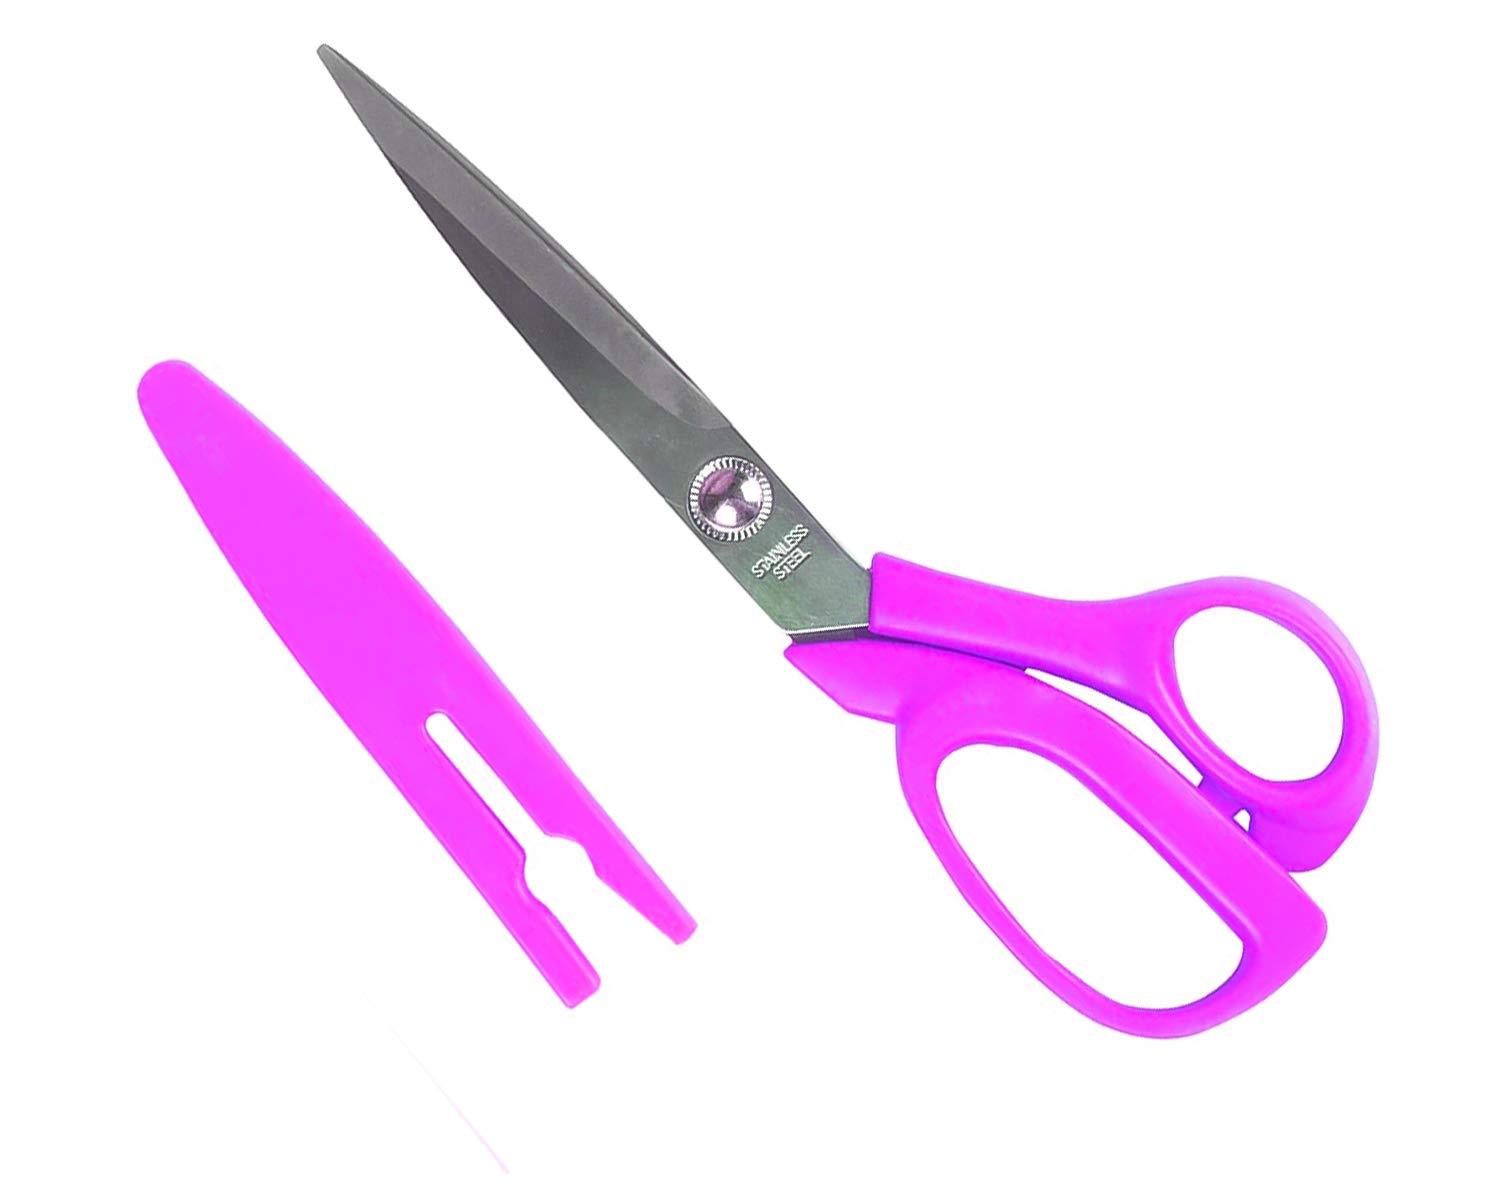 0556 Carbo Titanium Stainless Steel Scissors (10.5 inch) - SkyShopy